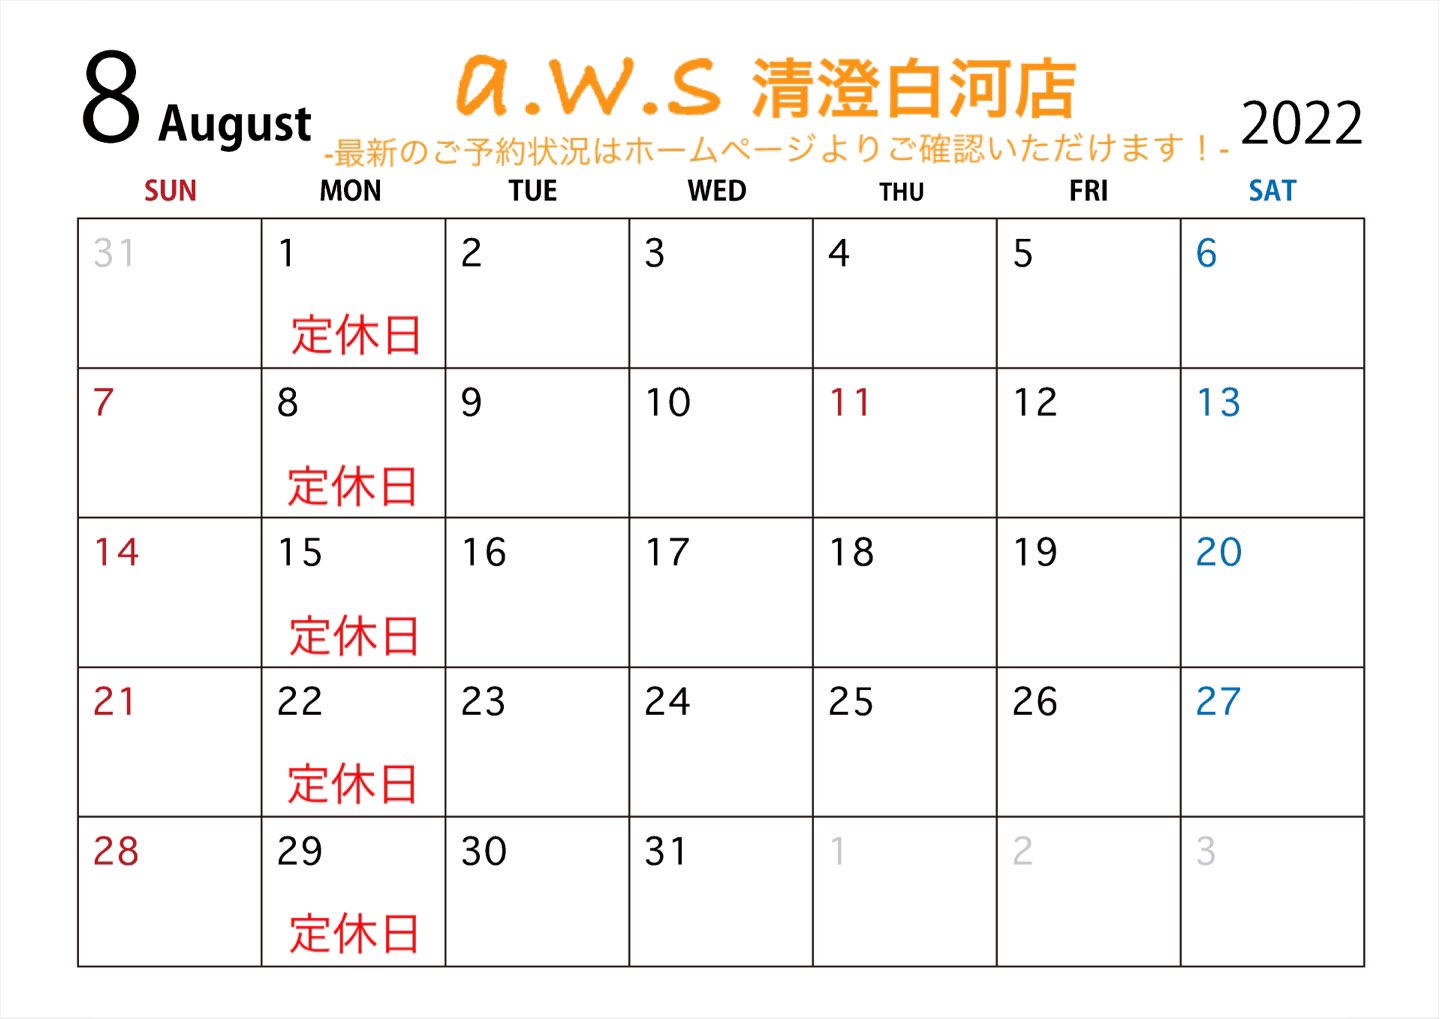 a.w.s清澄白河店8月の営業日